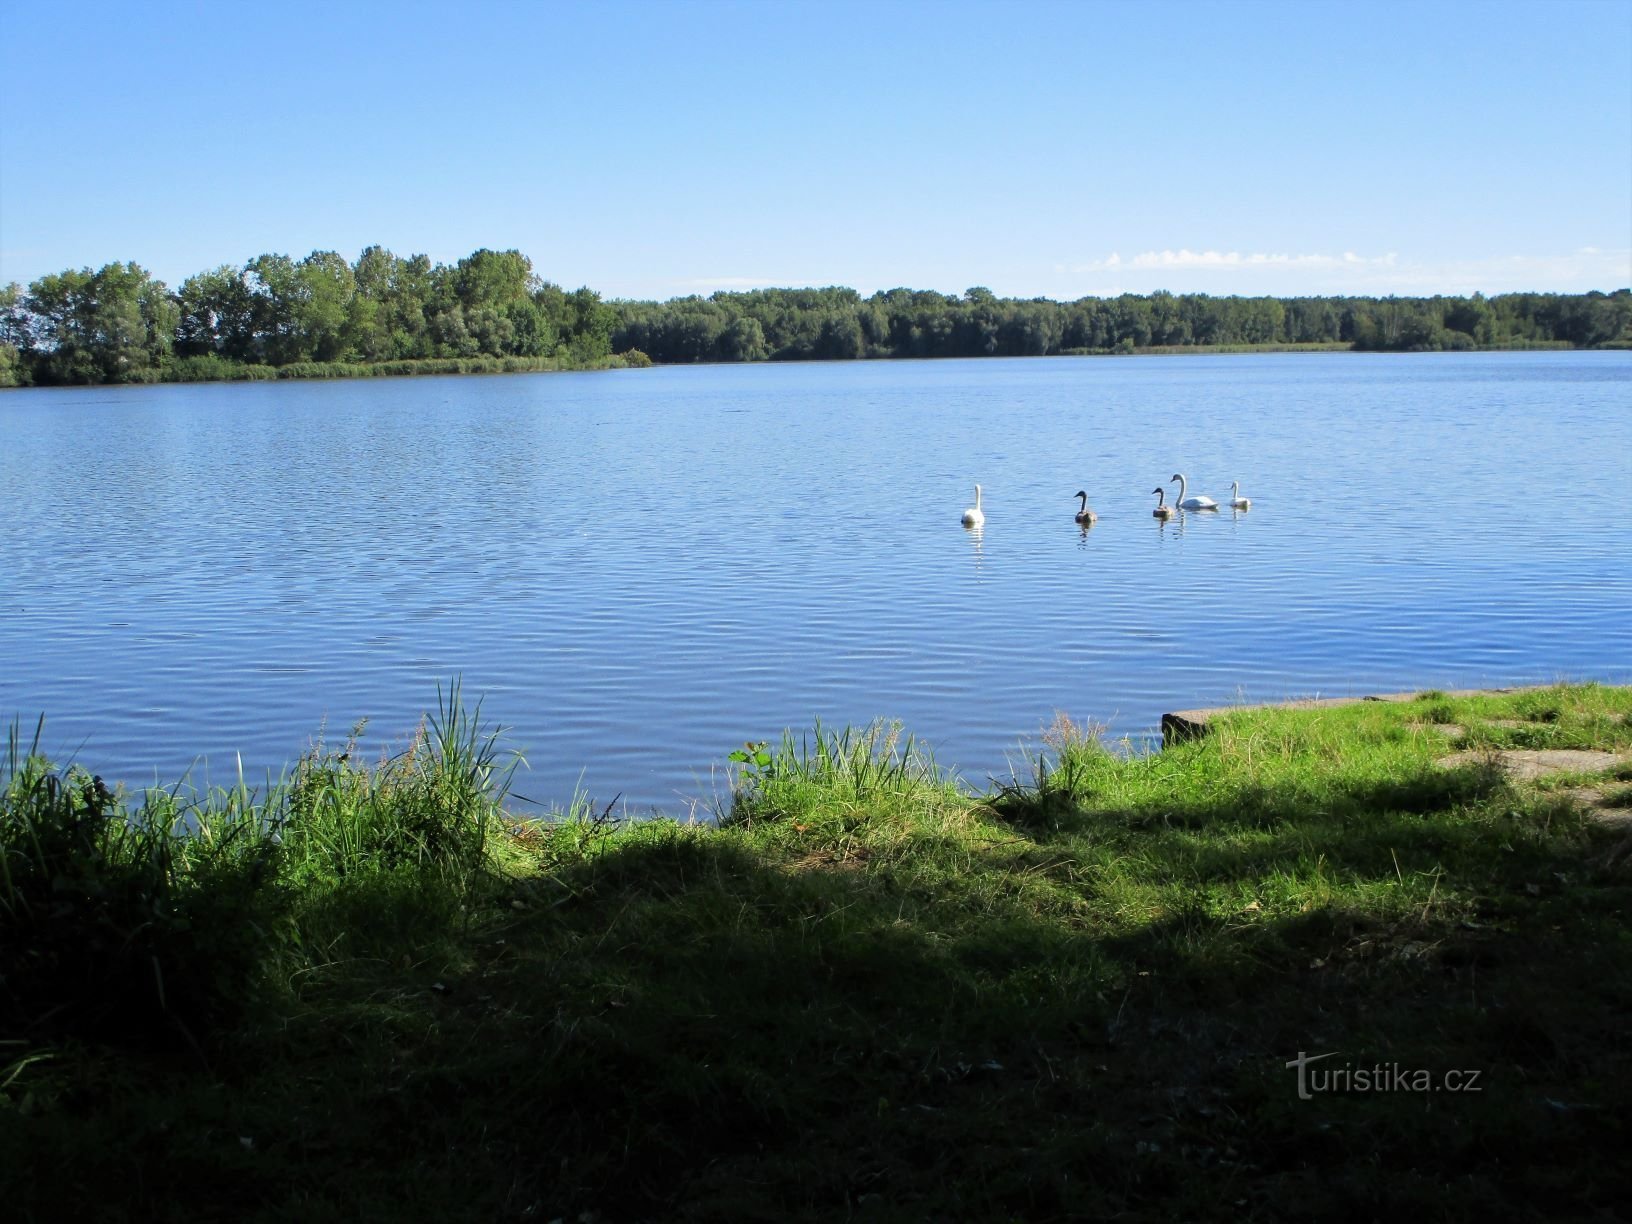 Пограновський ставок (Pohránov, 28.8.2020)